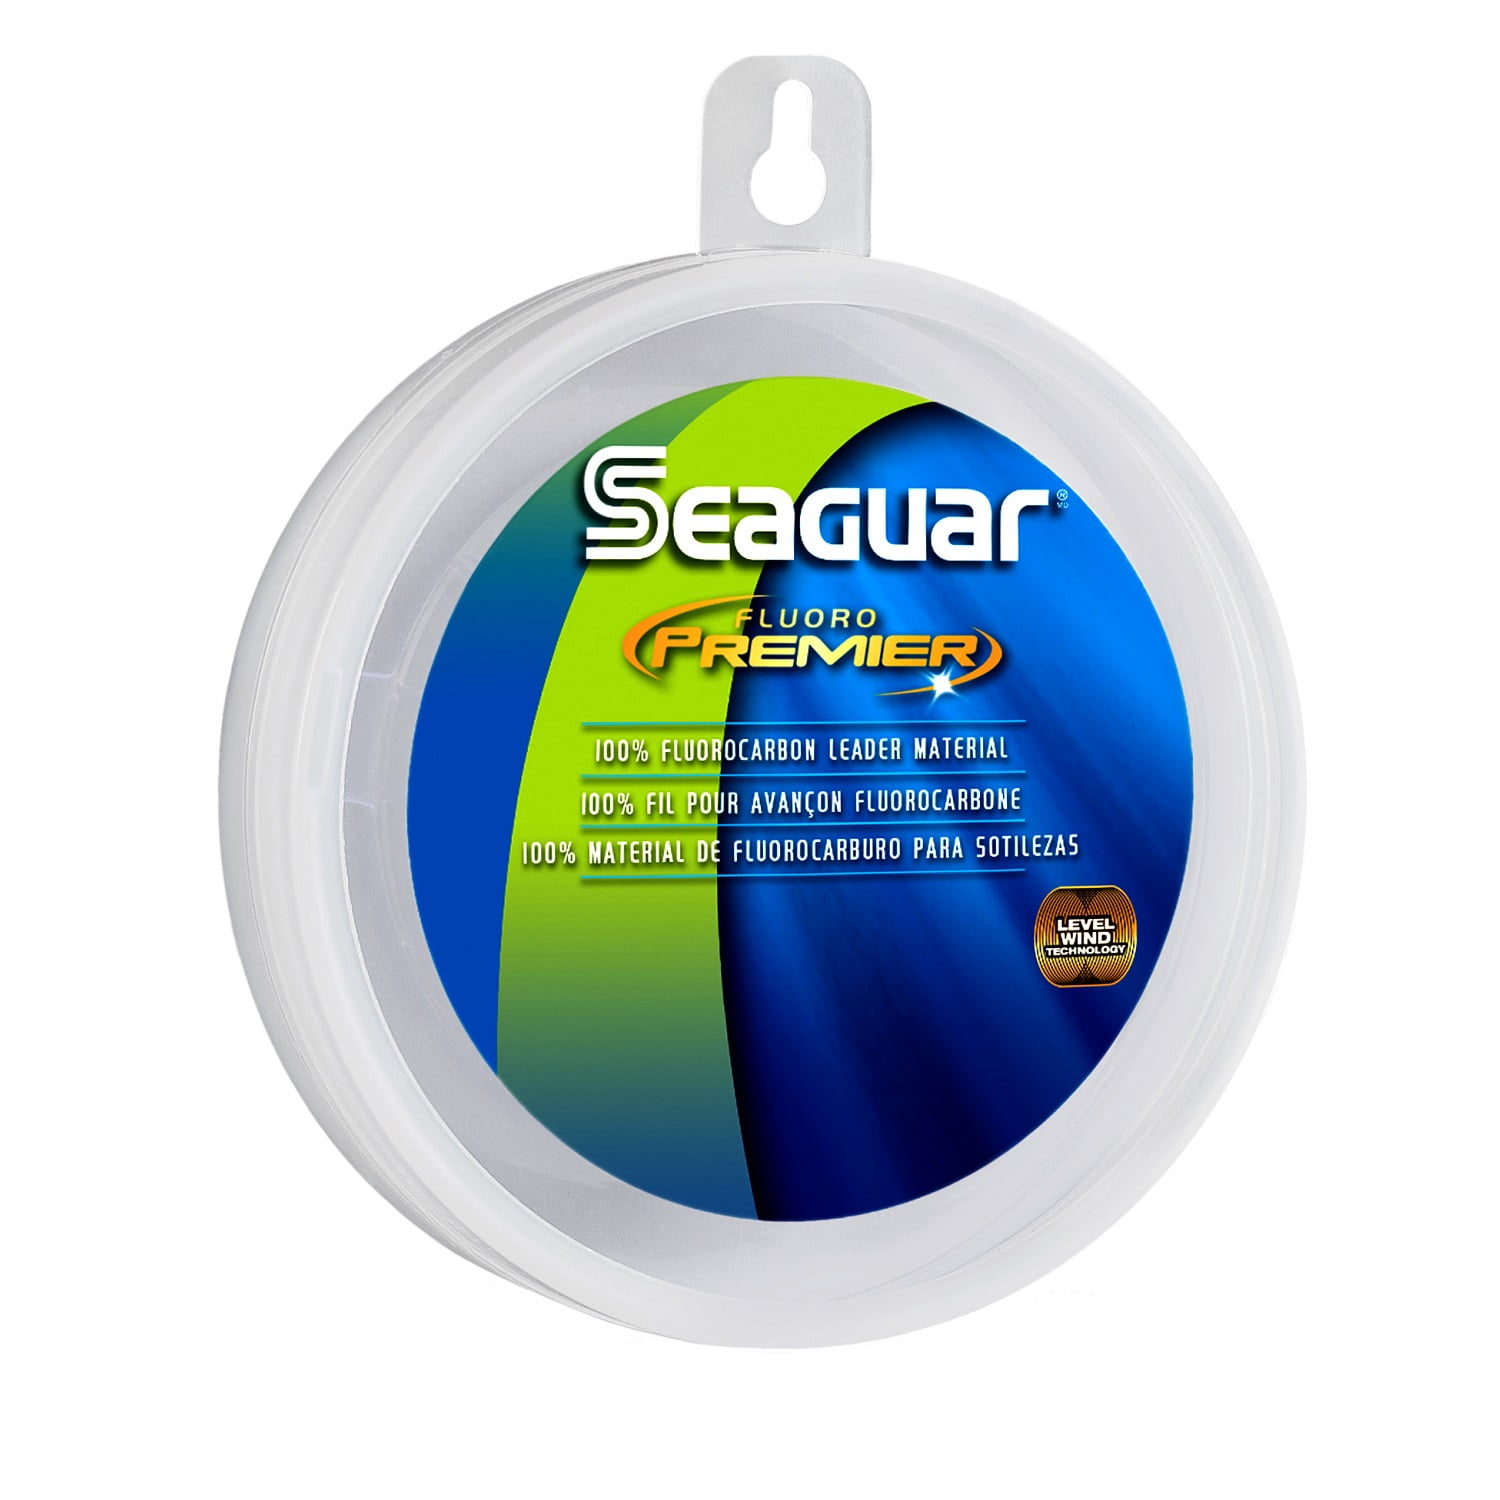 Seaguar 20FP25 Fluoro Premier 100 Fluorocarbon Leader 25 Yds 20 LB for sale online 